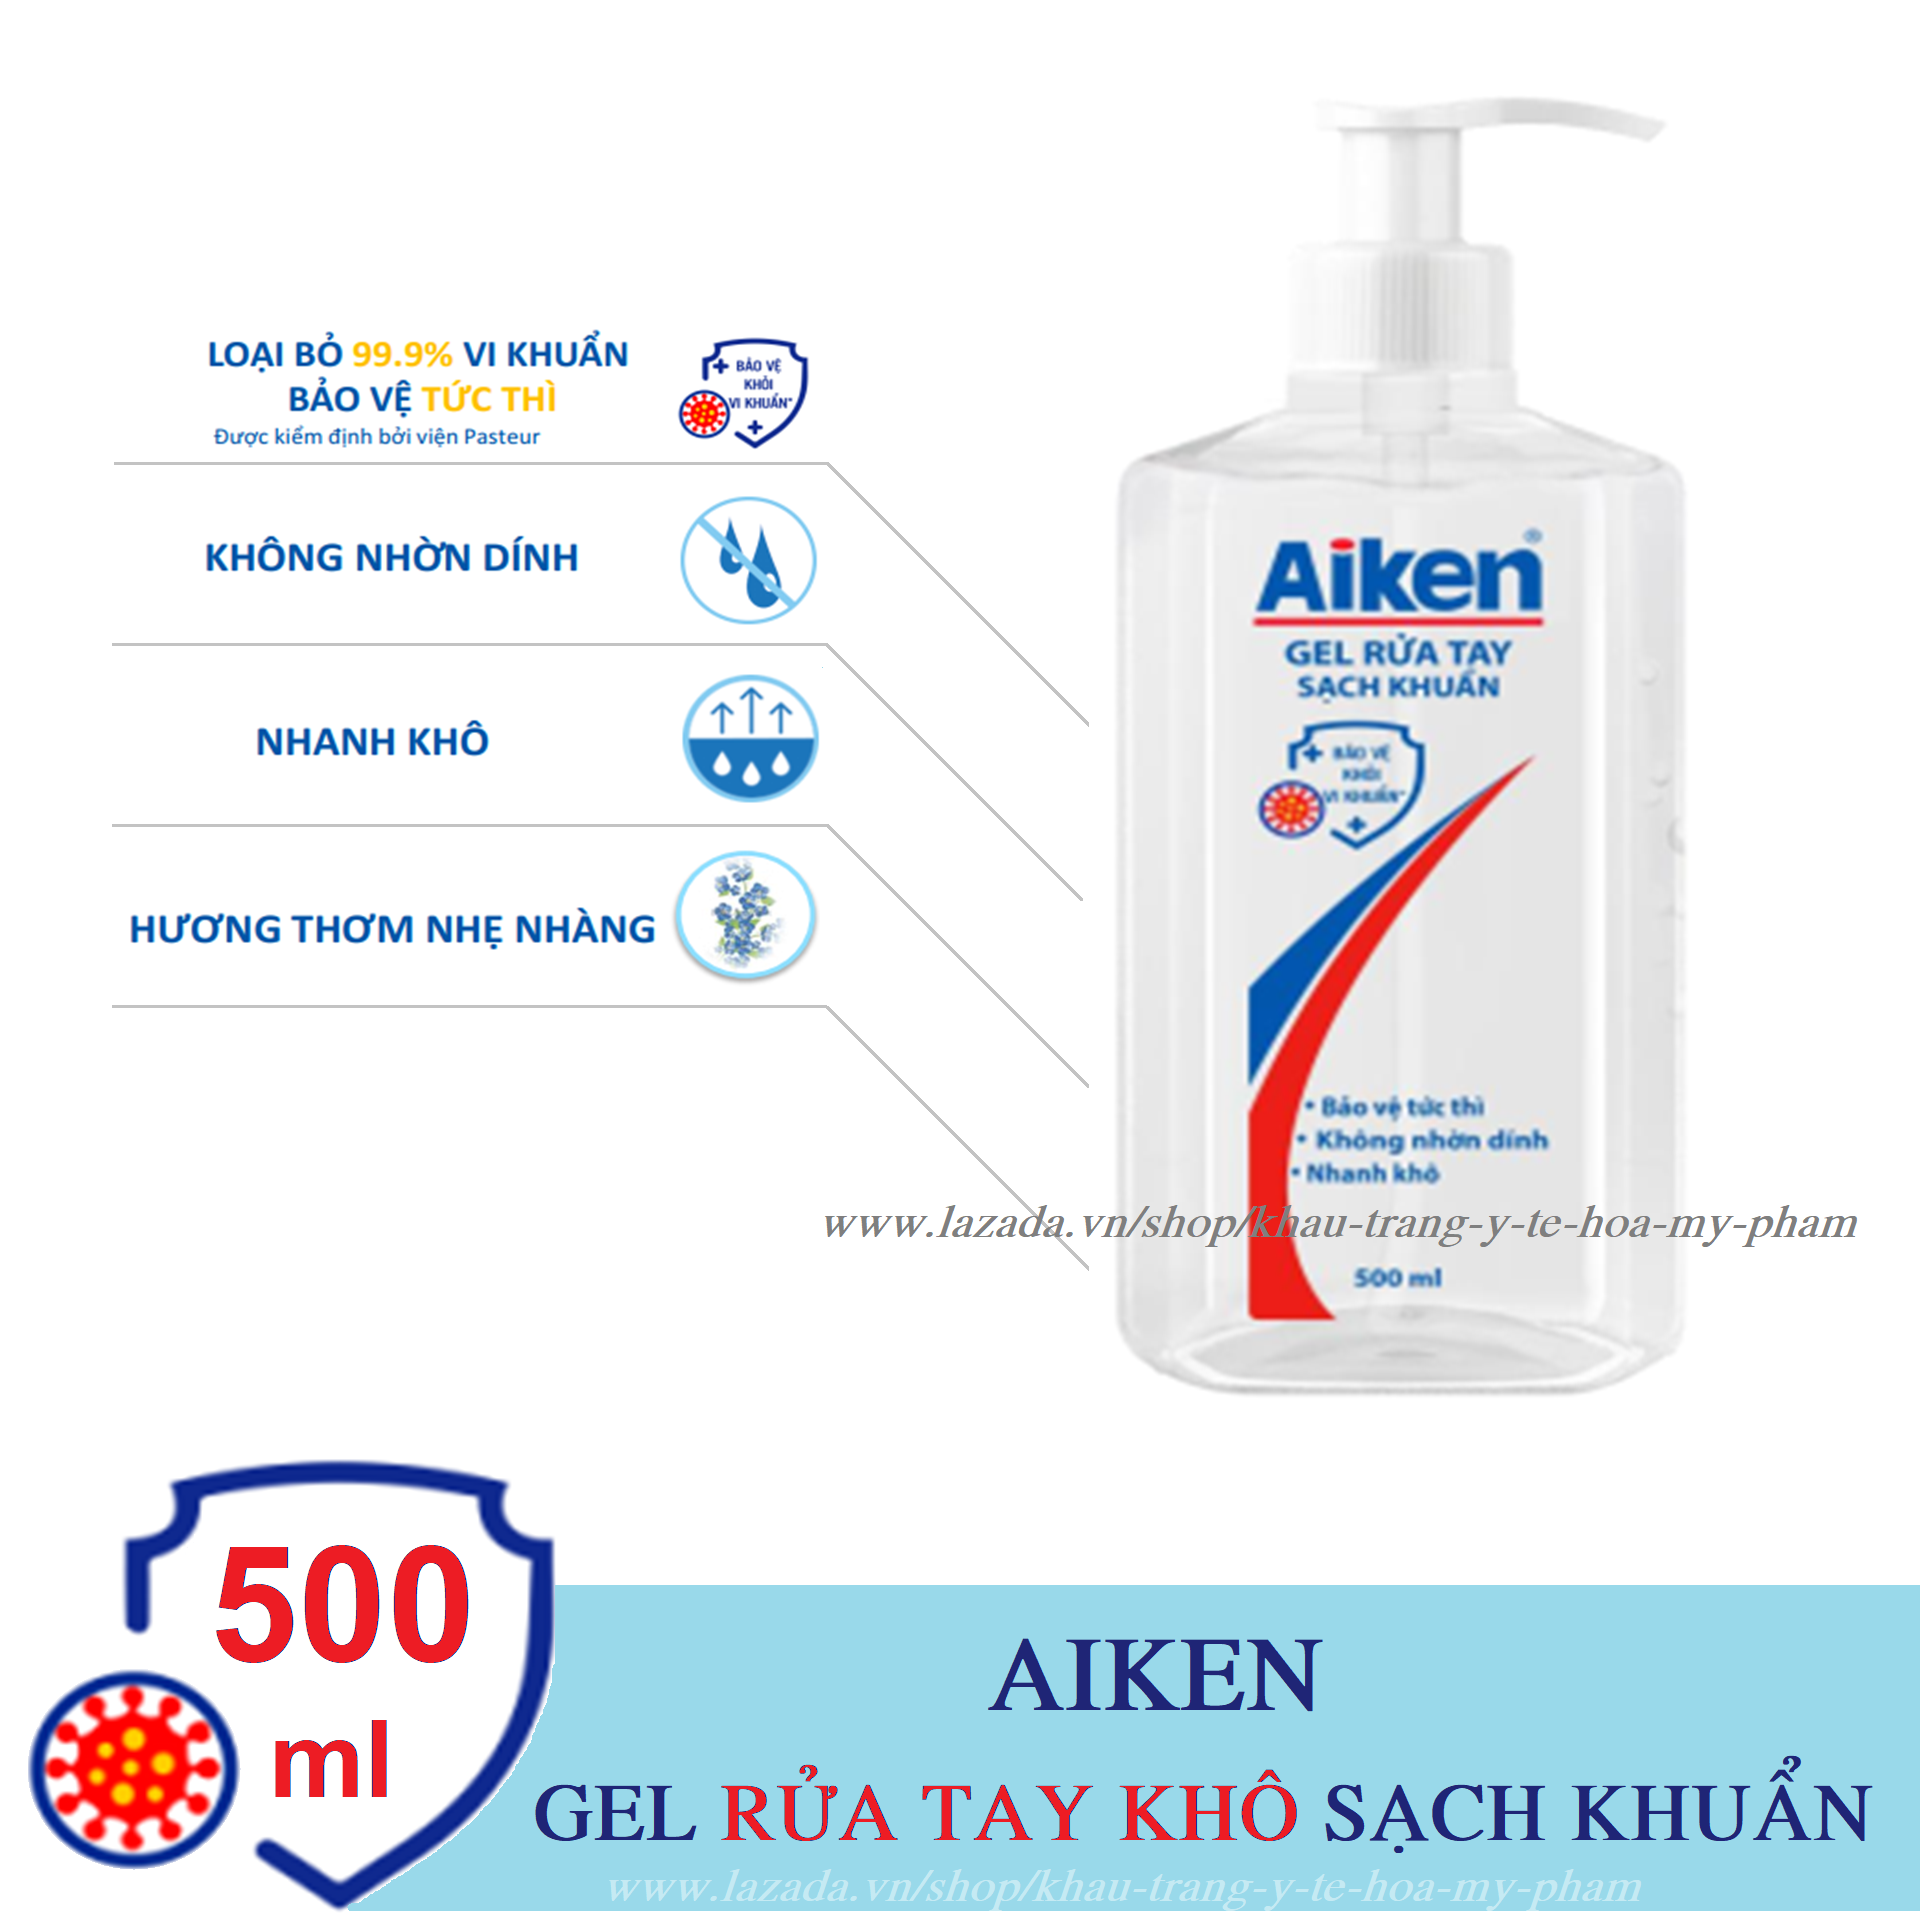 Aiken - Gel rửa tay khô sạch khuẩn 500 ml